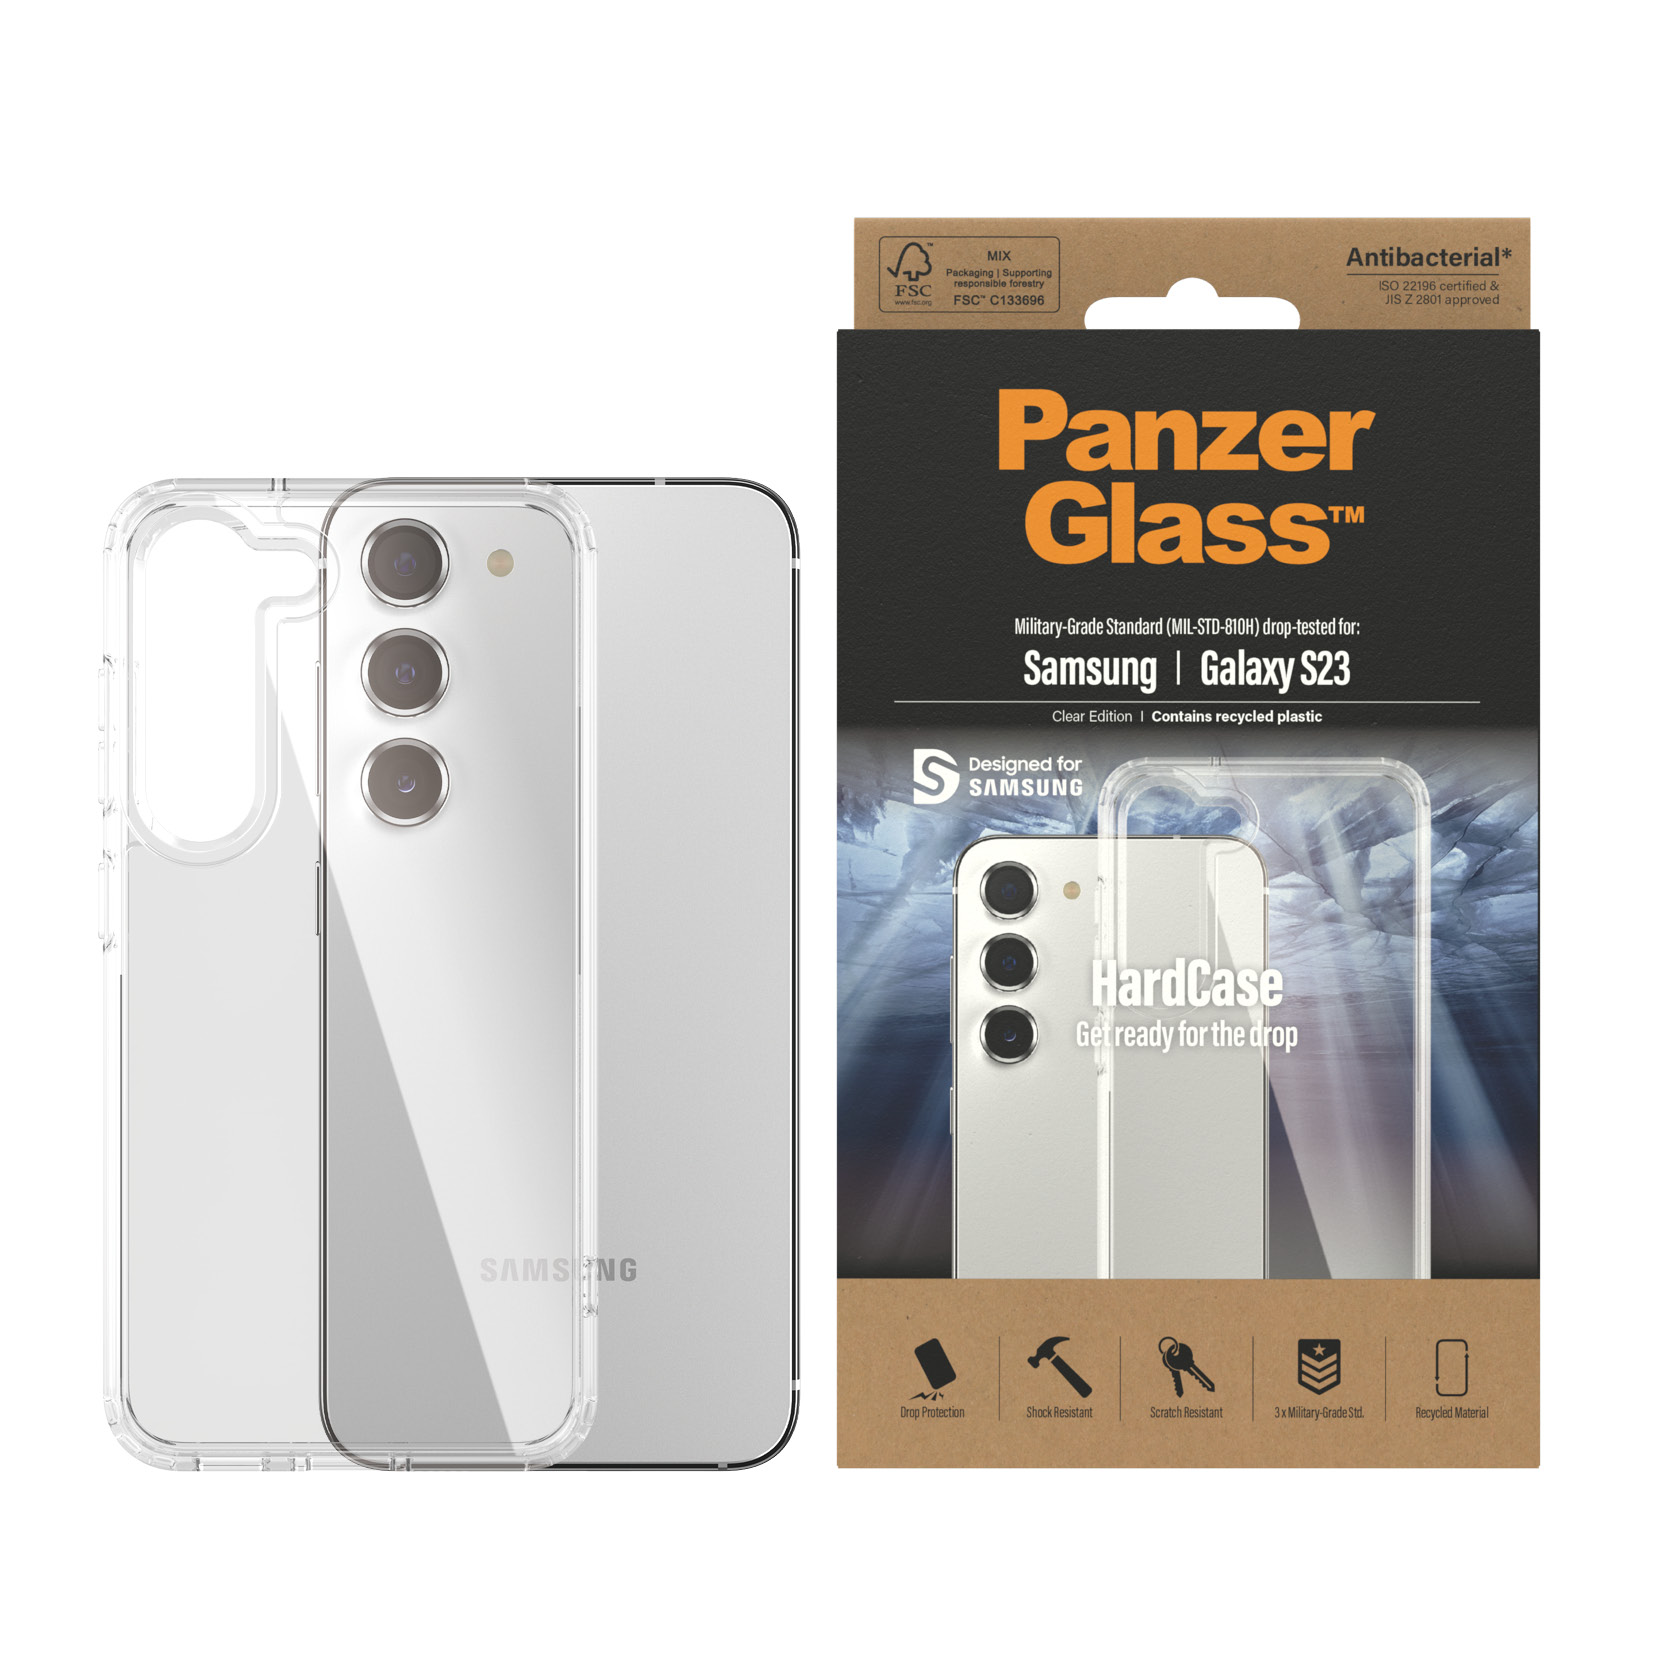 PanzerGlass Hard Case for Samsung Galaxy S 2023 AB